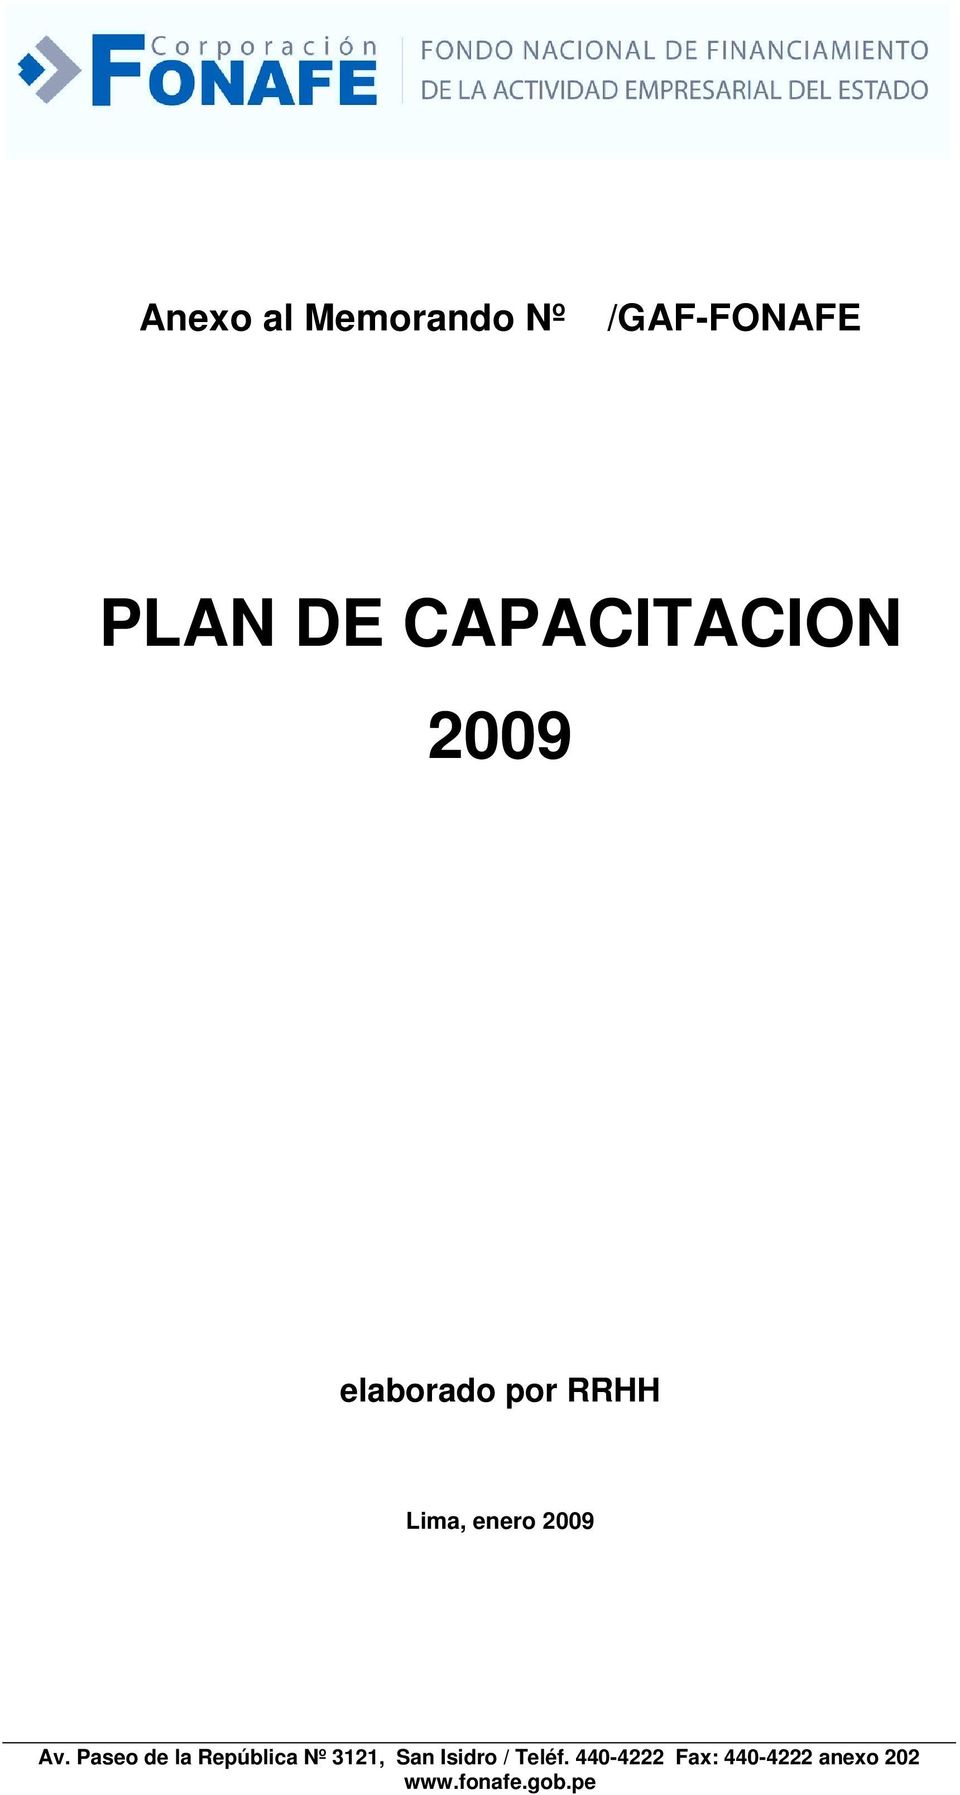 CAPACITACION 2009